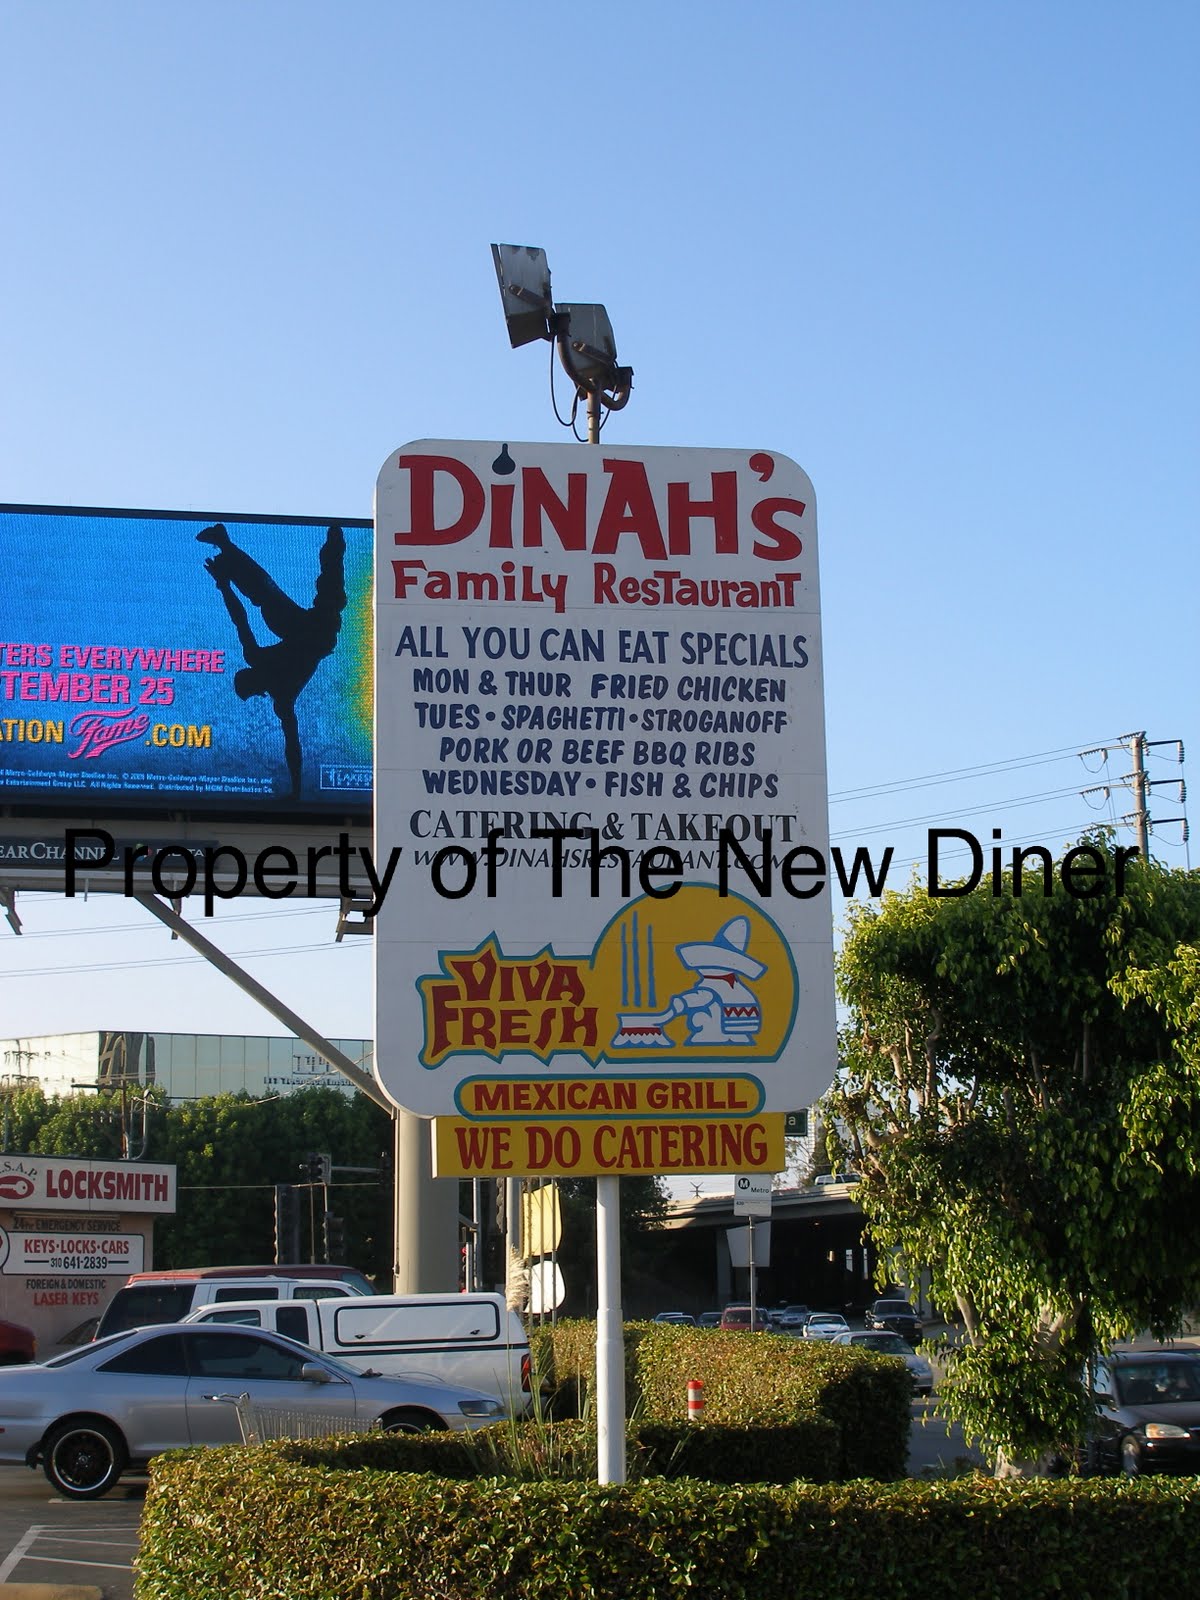 The New Diner: Dinah's Family Restaurant